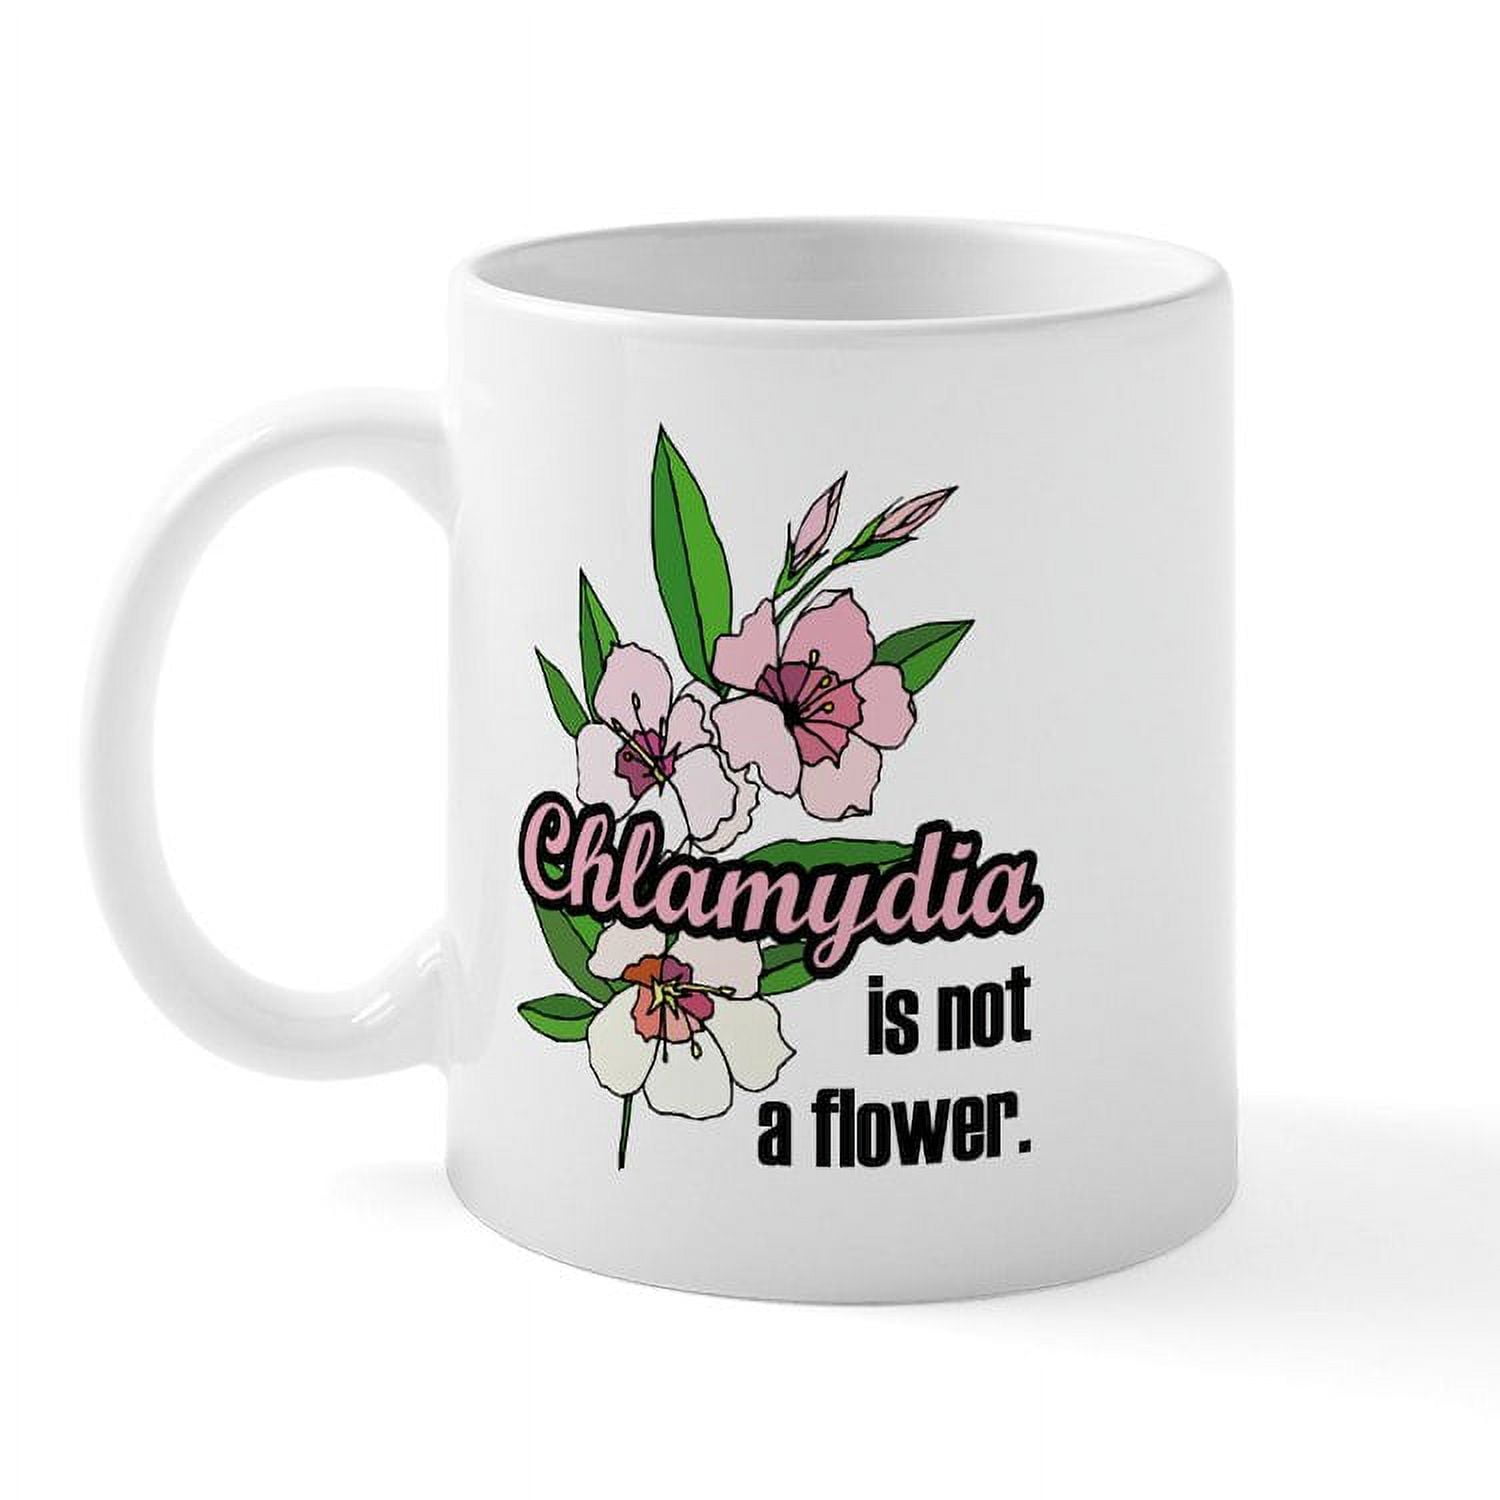 Cafepress - My Little Pony Rainbow Dash Flowers Mugs - 11 oz Ceramic Mug - Novelty Coffee Tea Cup, Size: Small, Blue